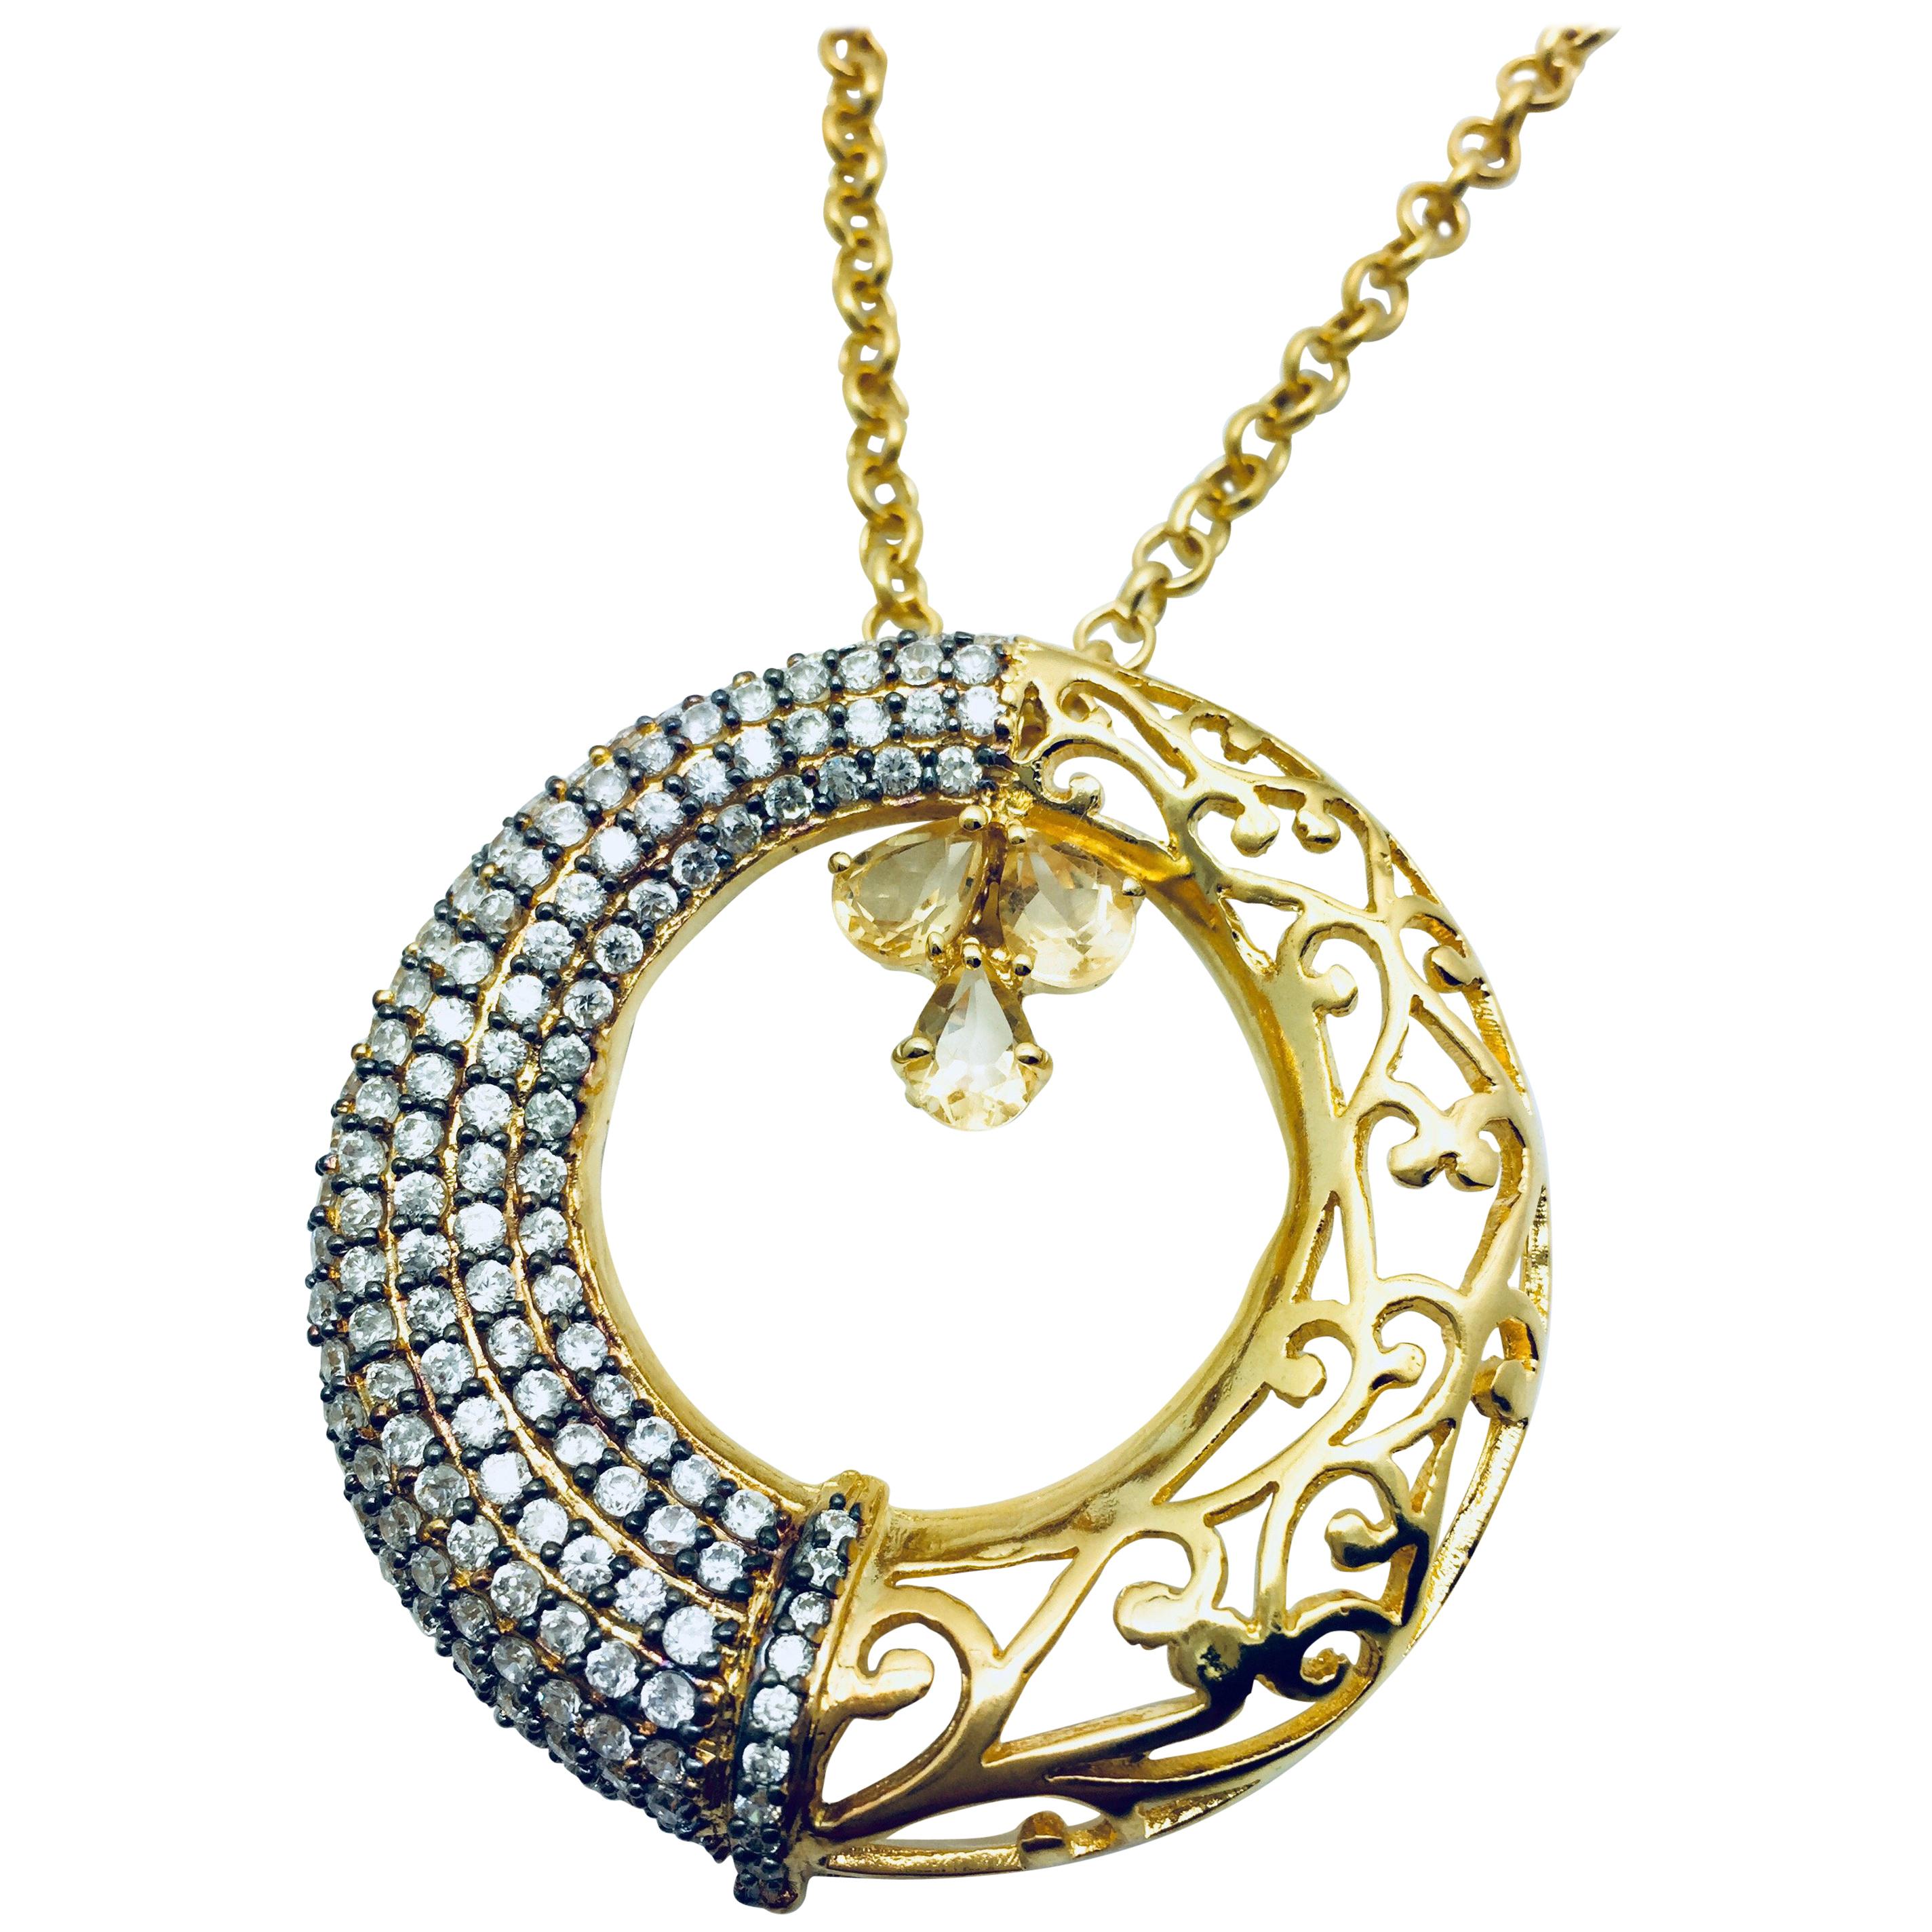 Filigree Florence Crystal Pendant Necklace 